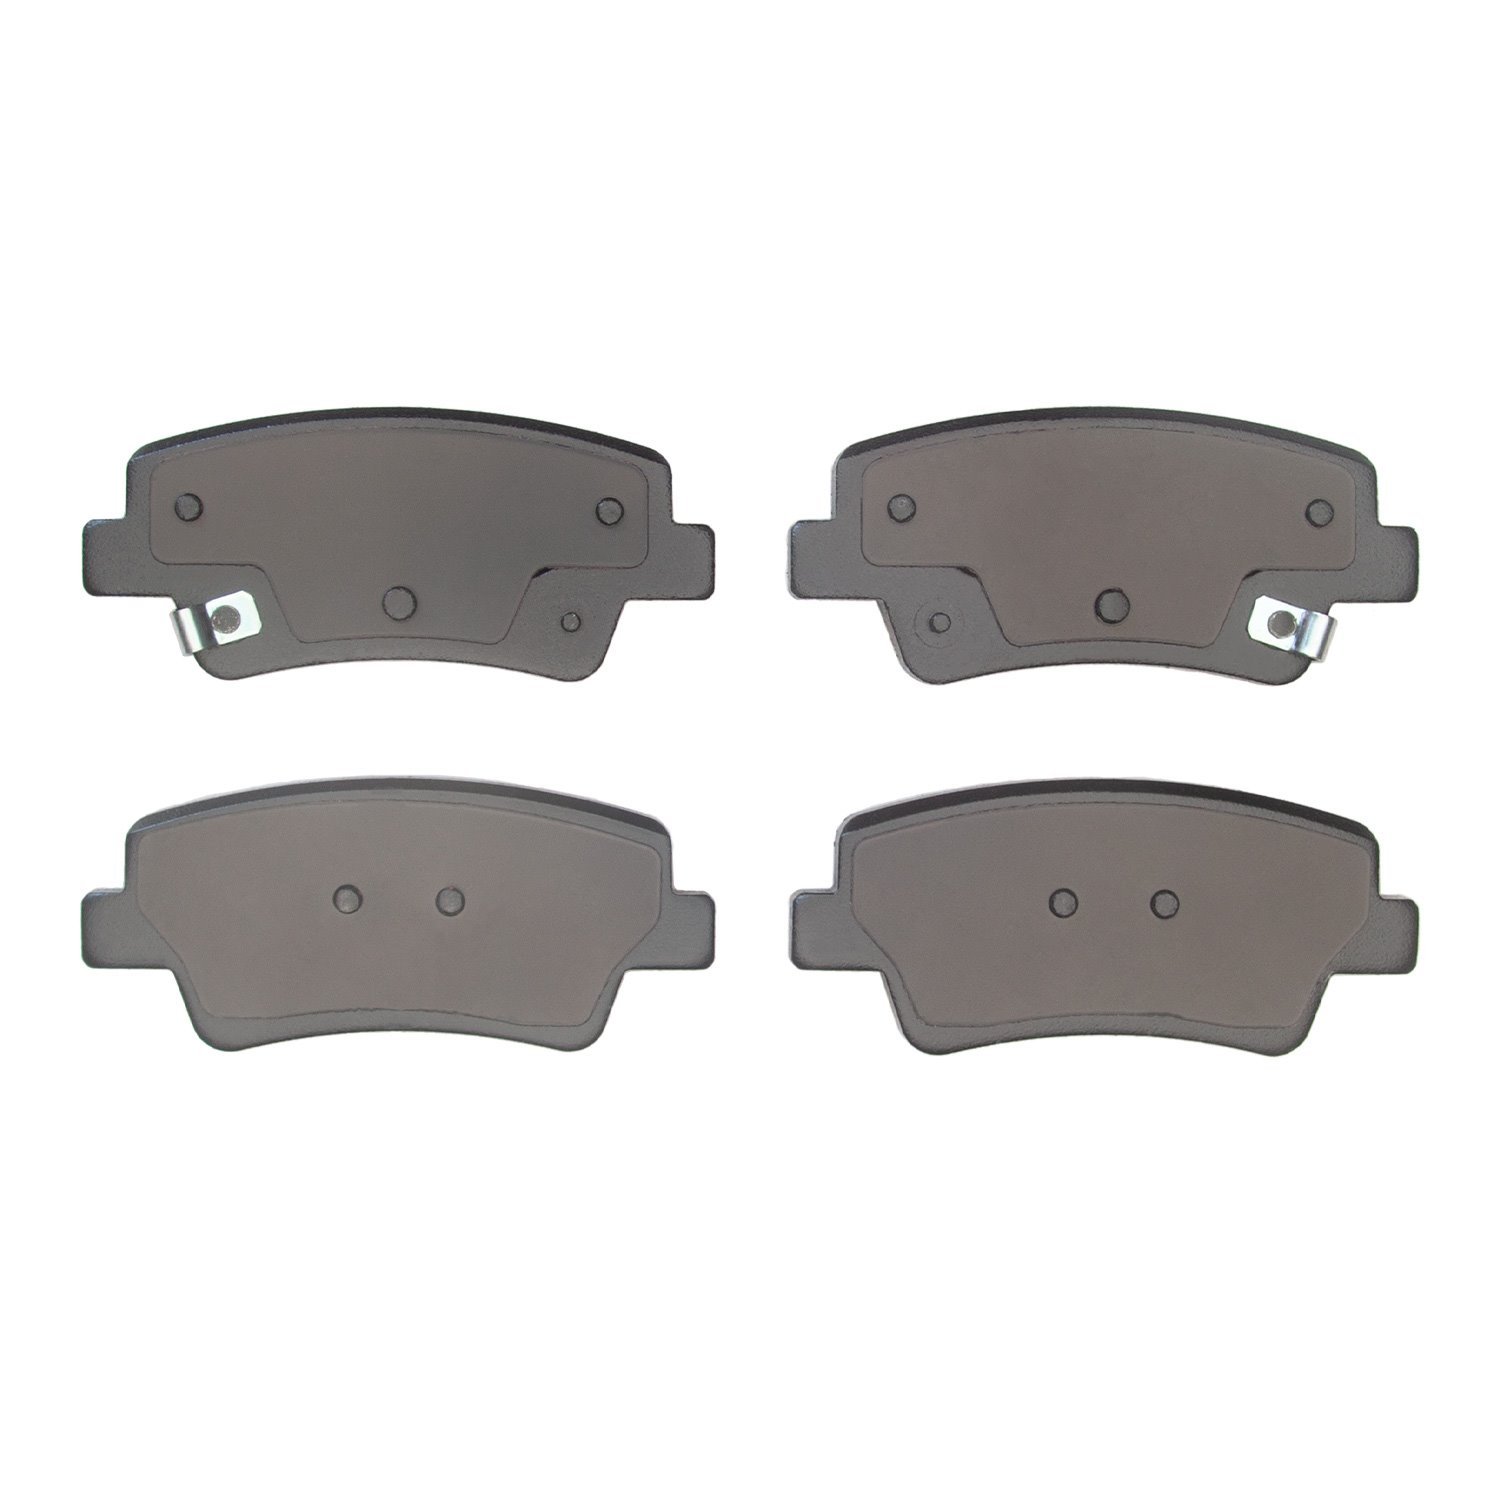 1310-2395-00 3000-Series Ceramic Brake Pads, Fits Select Kia/Hyundai/Genesis, Position: Rear